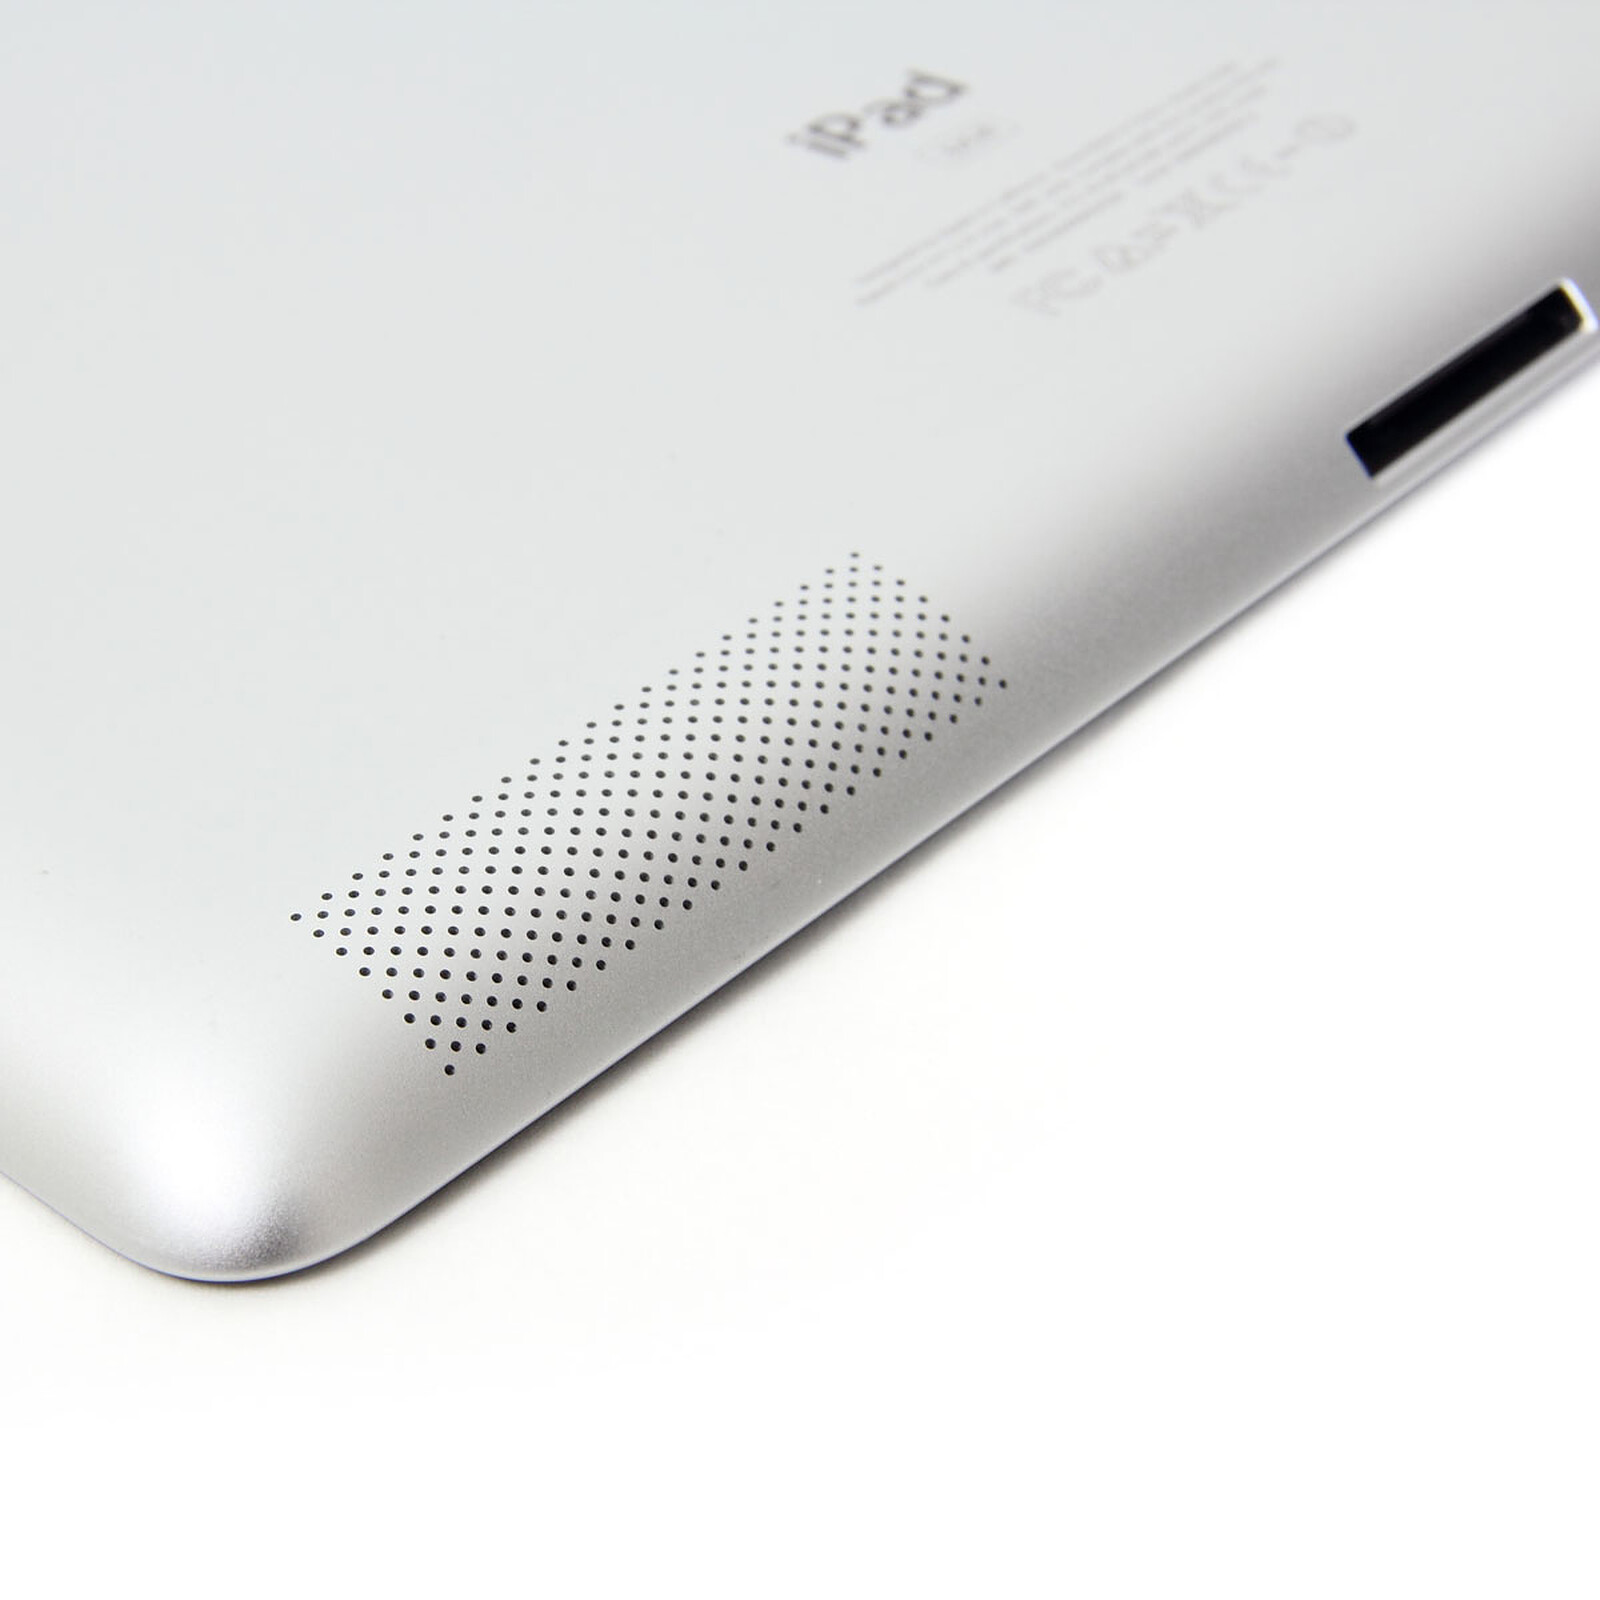 Apple iPad 2, A1395, Wi-Fi - tablette - 16 Go - 9.7 IPS (1024 x